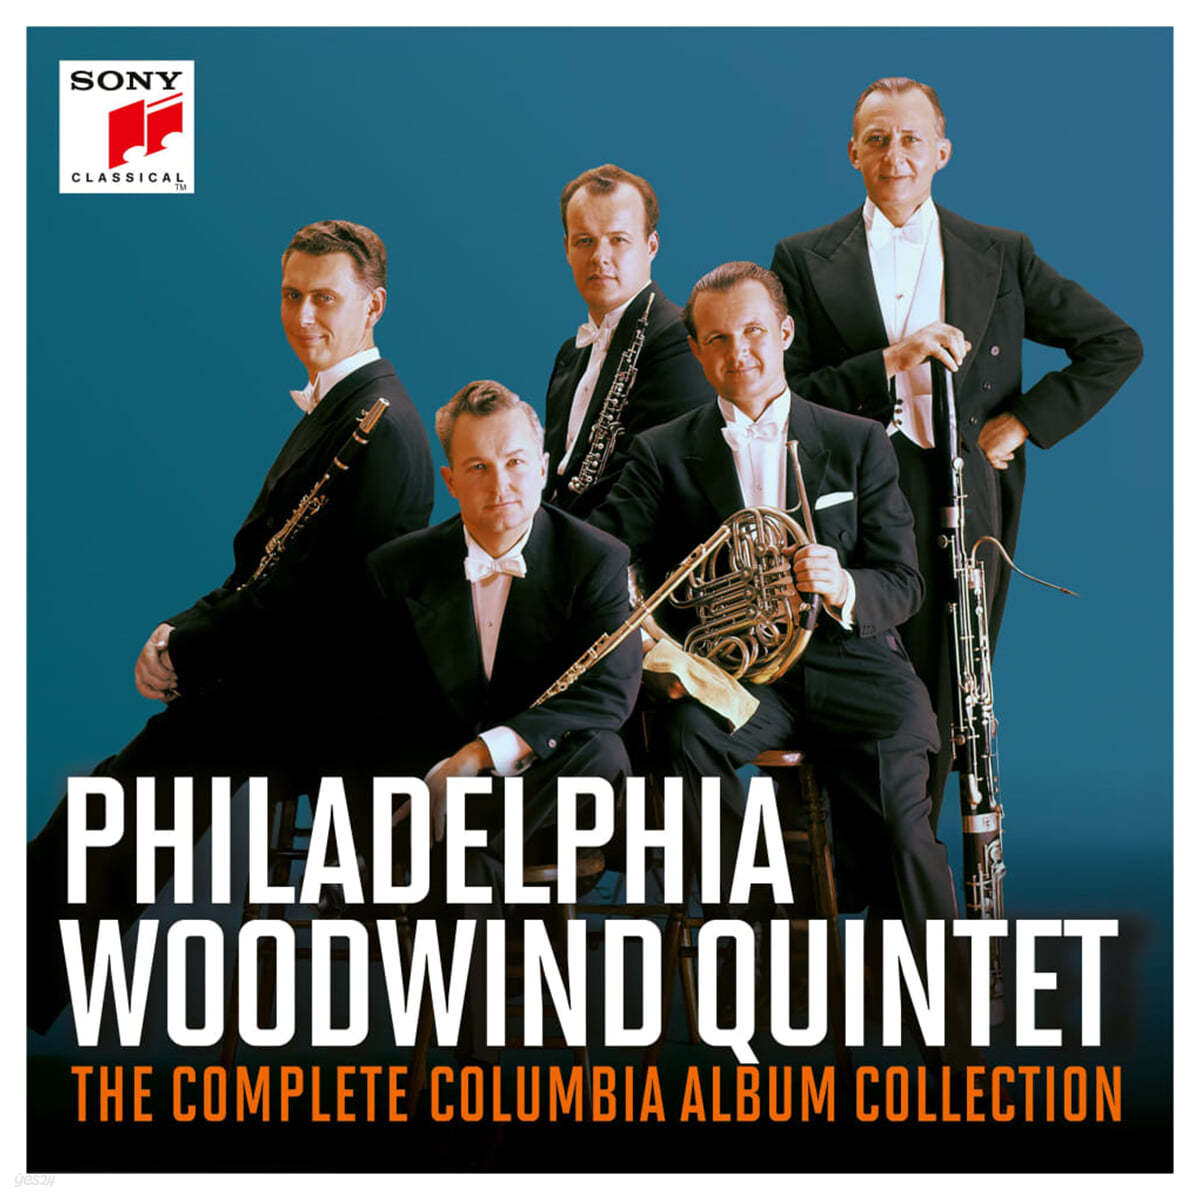 The Philadelphia Woodwind Quintet 필라델피아 목관 오중주단 콜럼비아 녹음 전집 (The Complete Columbia Album Collection)